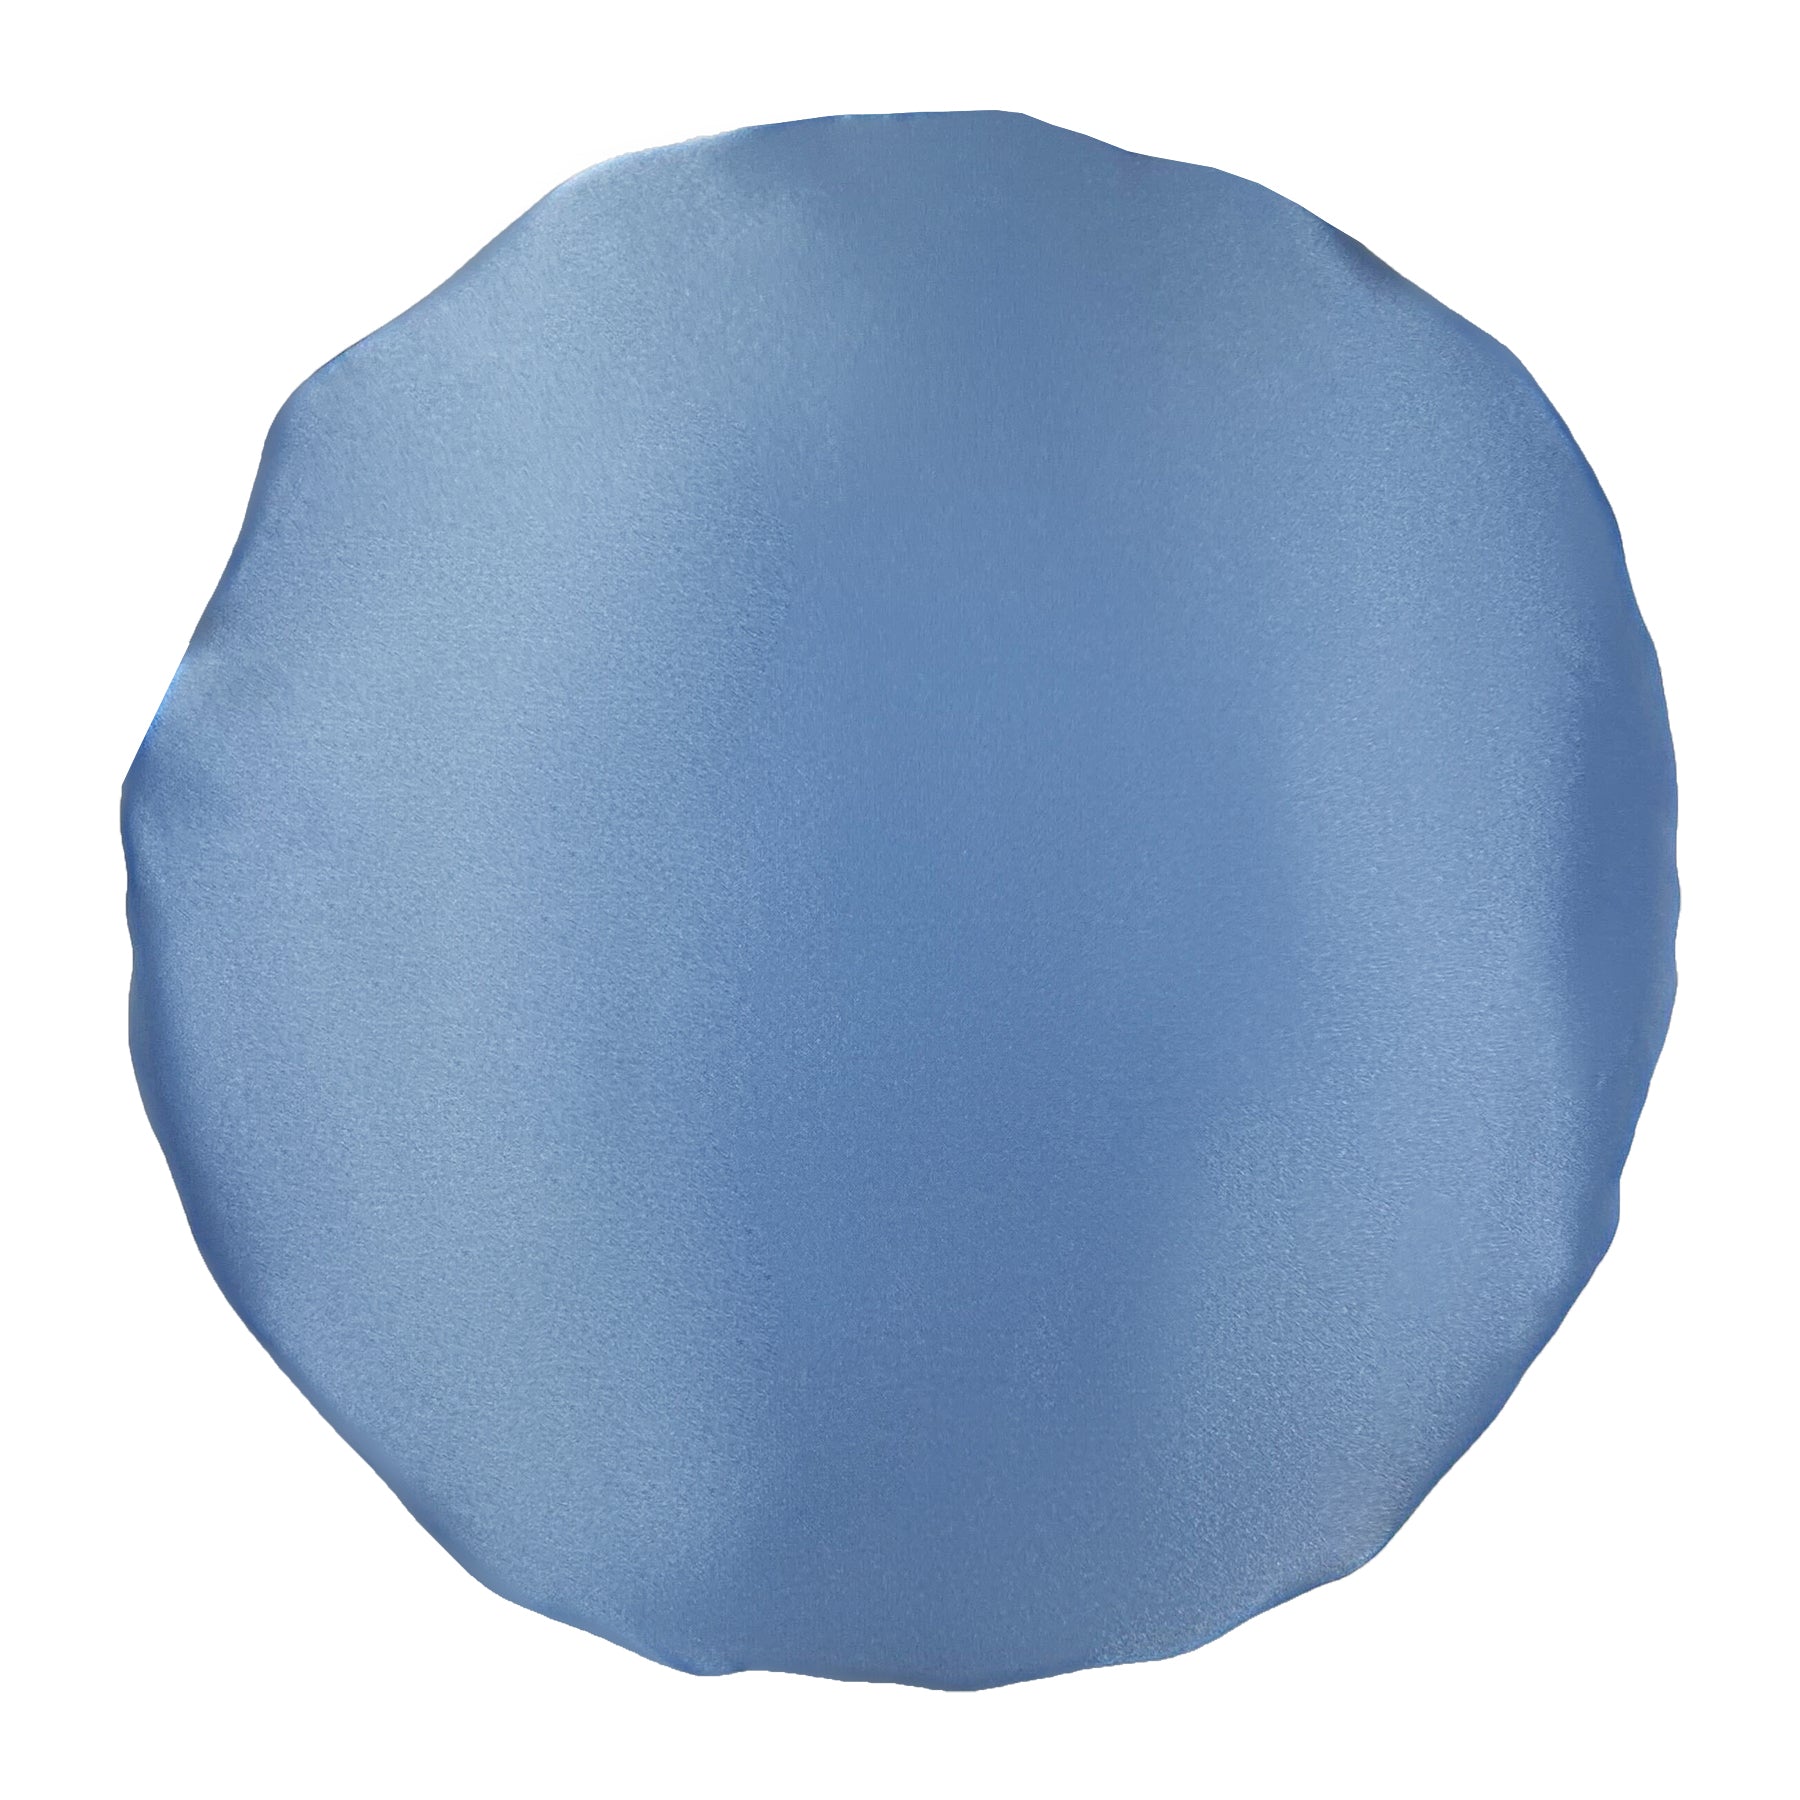 Silk Night Sleeping Cap Bonnet with Comfort Elastic Band - MYK Silk #color_blue